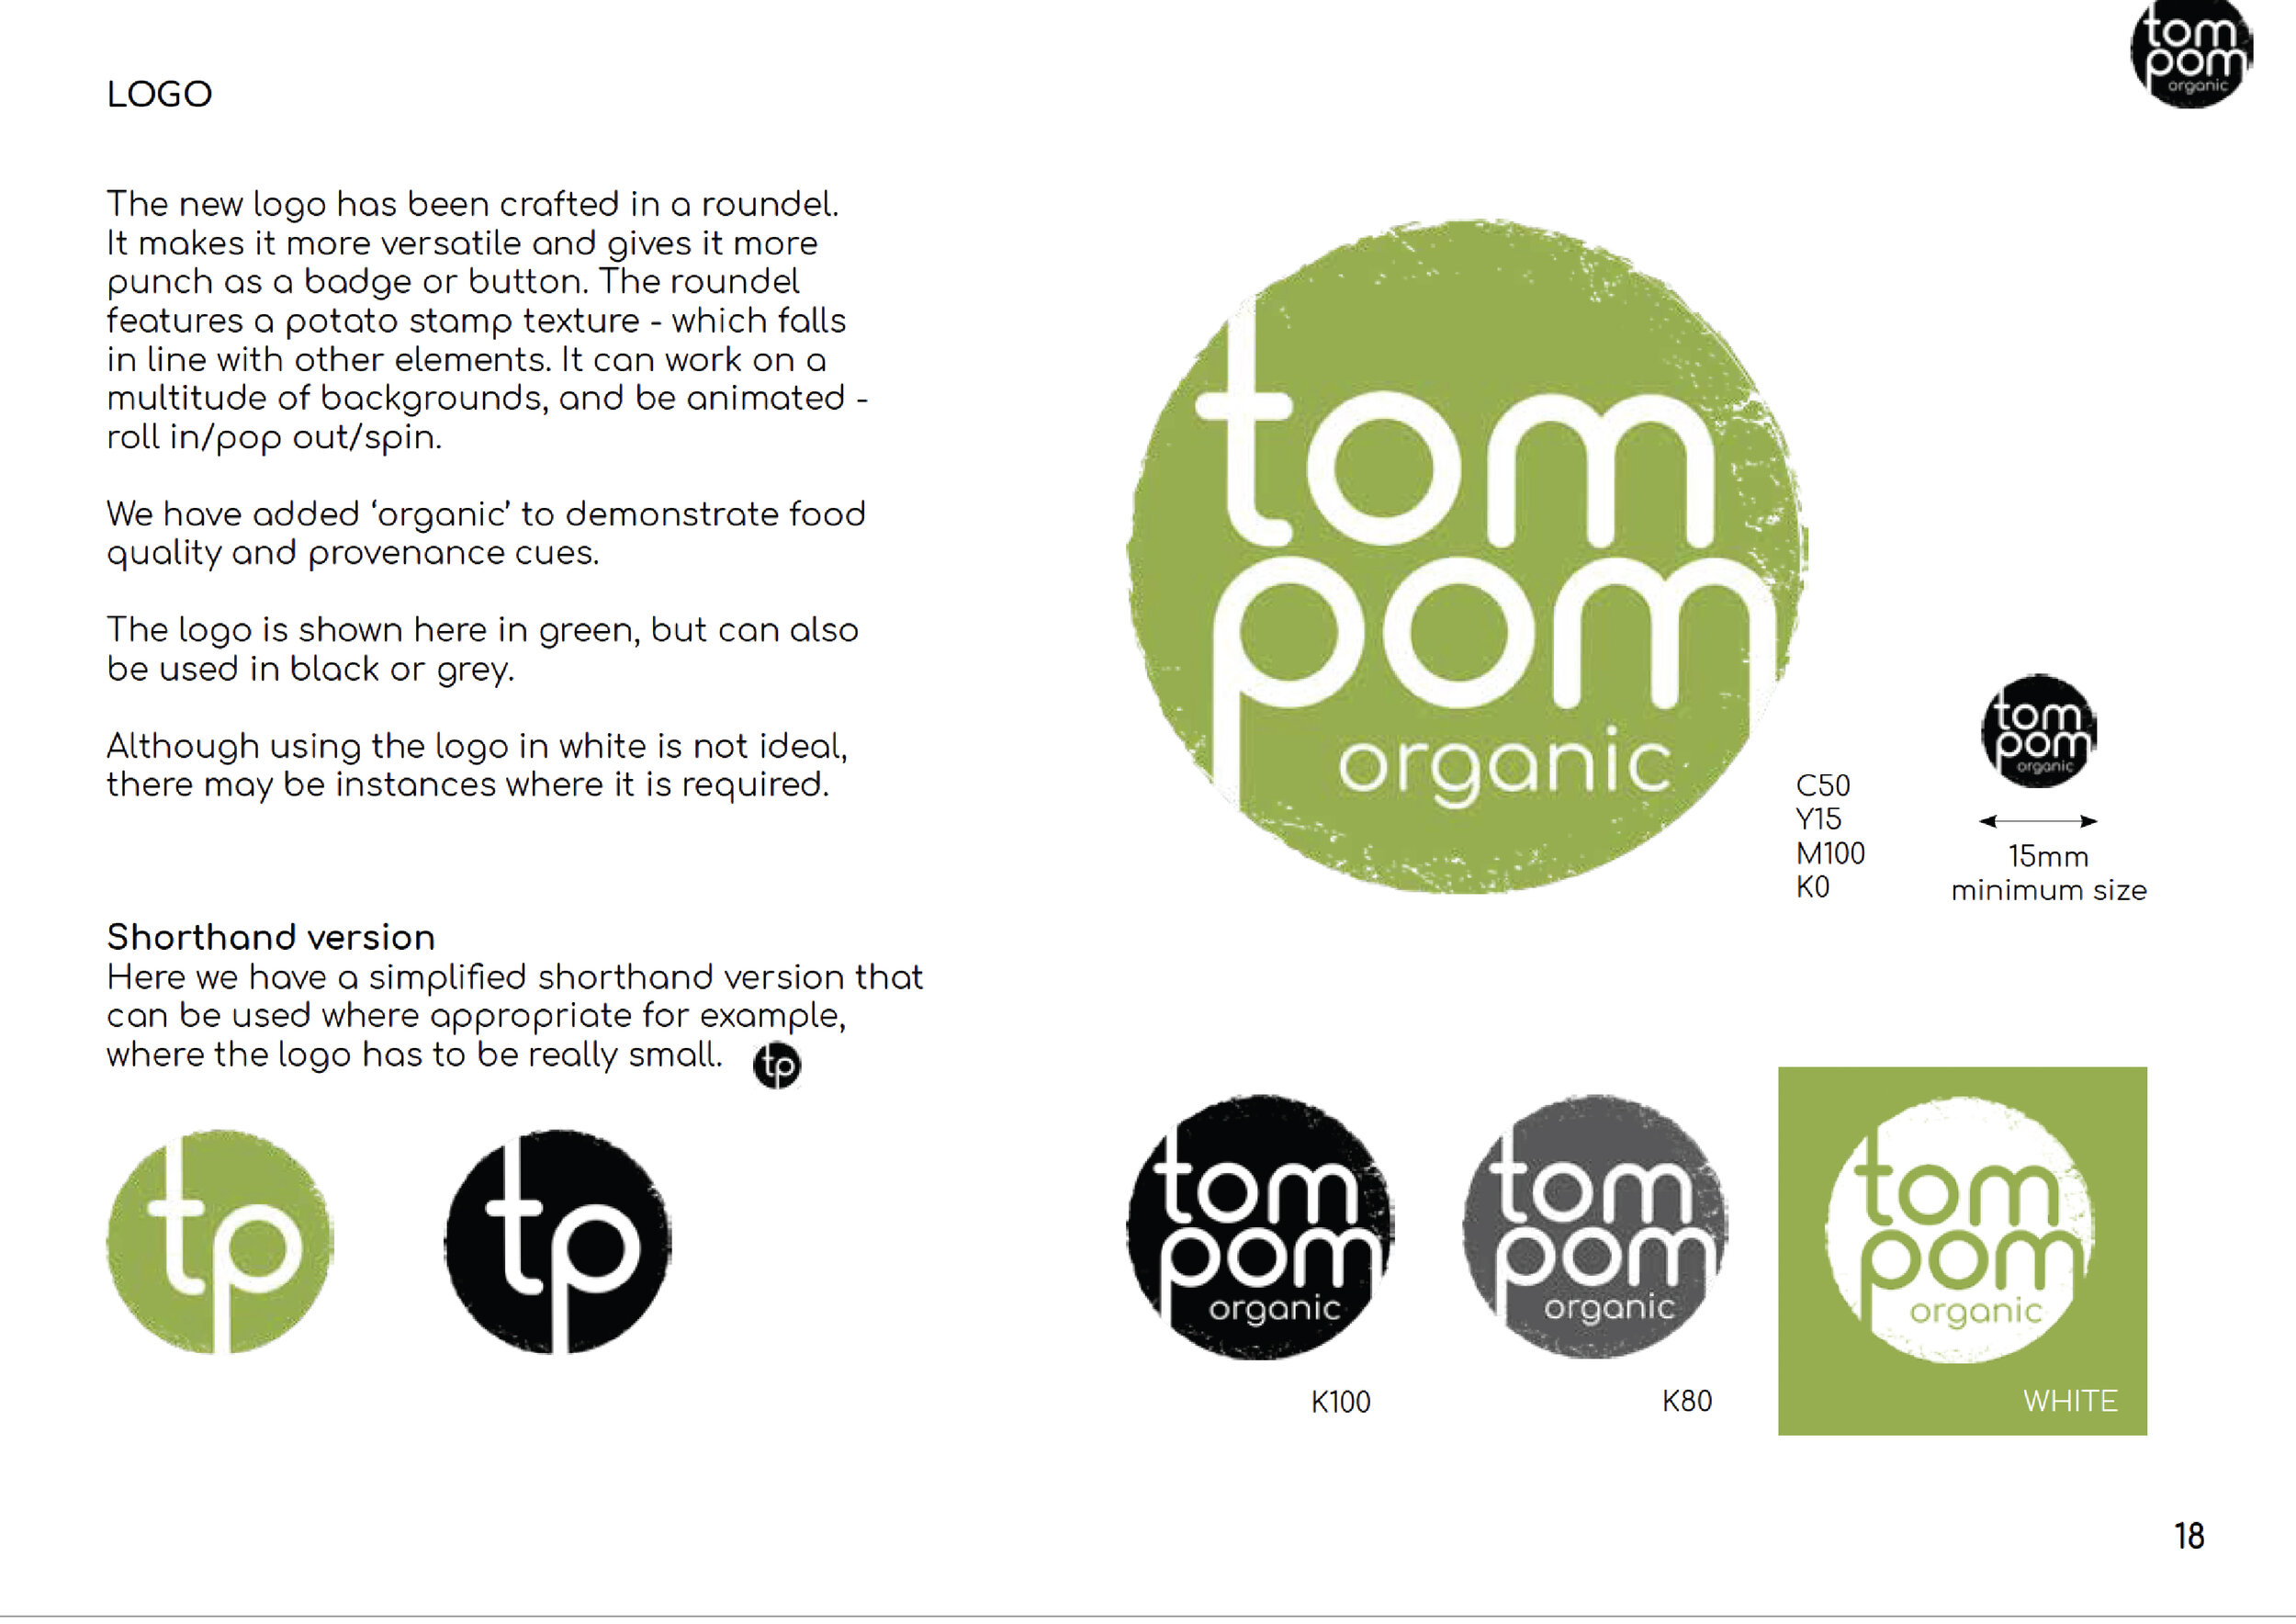 IMAGES FOR WEBSITE_TOM POM-08.jpg